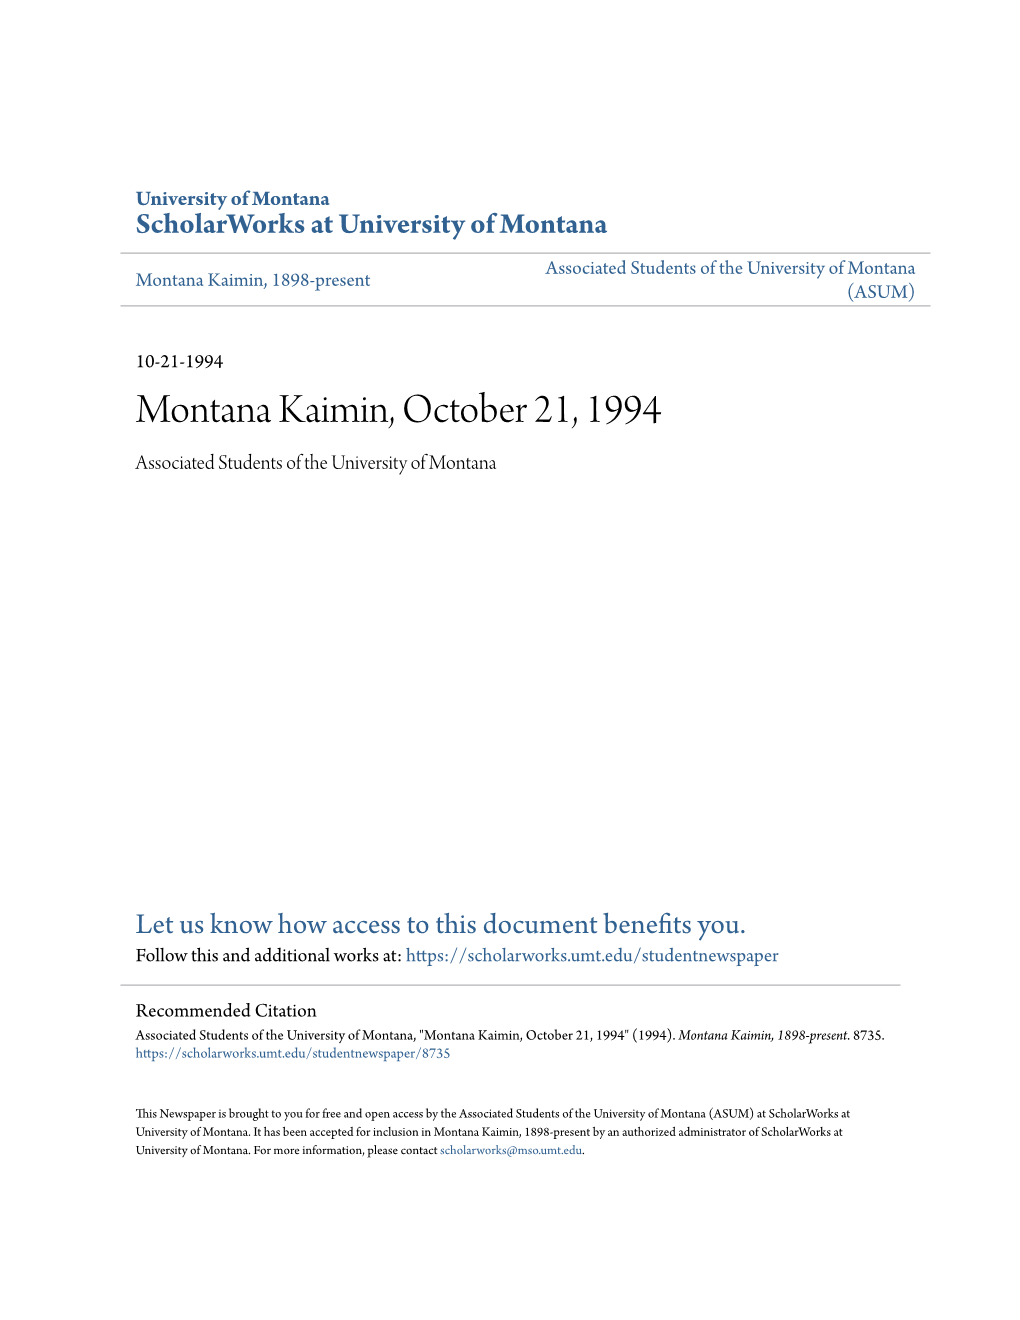 Montana Kaimin, October 21, 1994 Associated Students of the University of Montana